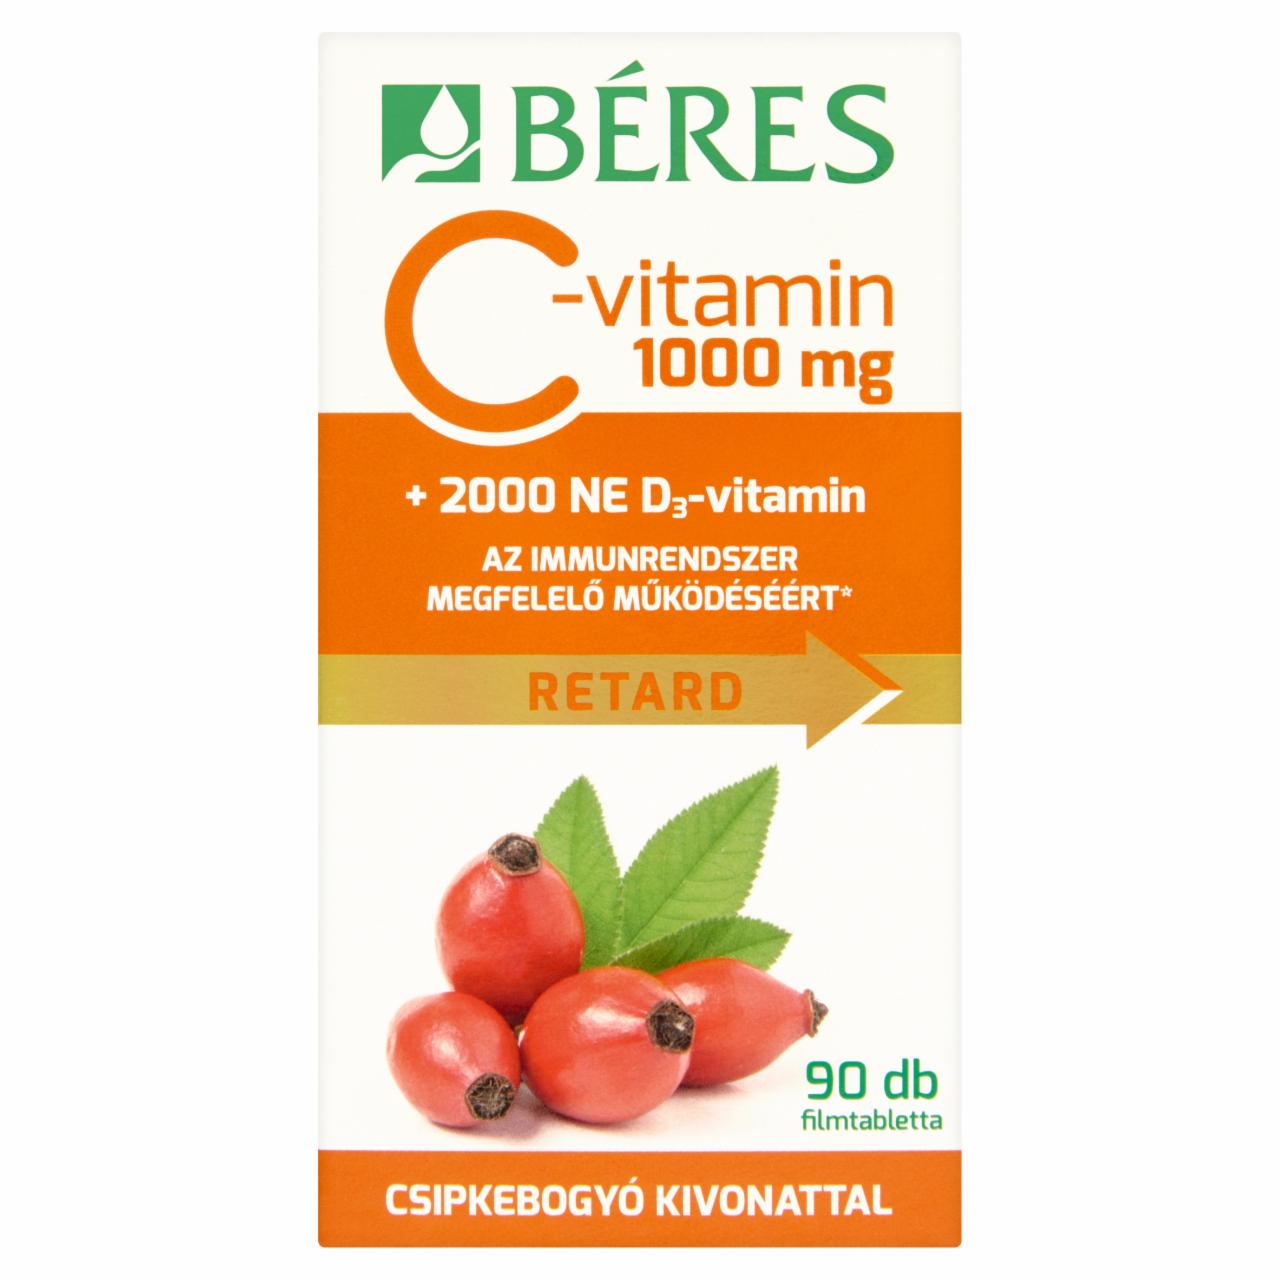 Képek - Béres C-vitamin 1000 mg retard filmtabletta csipkebogyó kivonattal 90 db 128 g